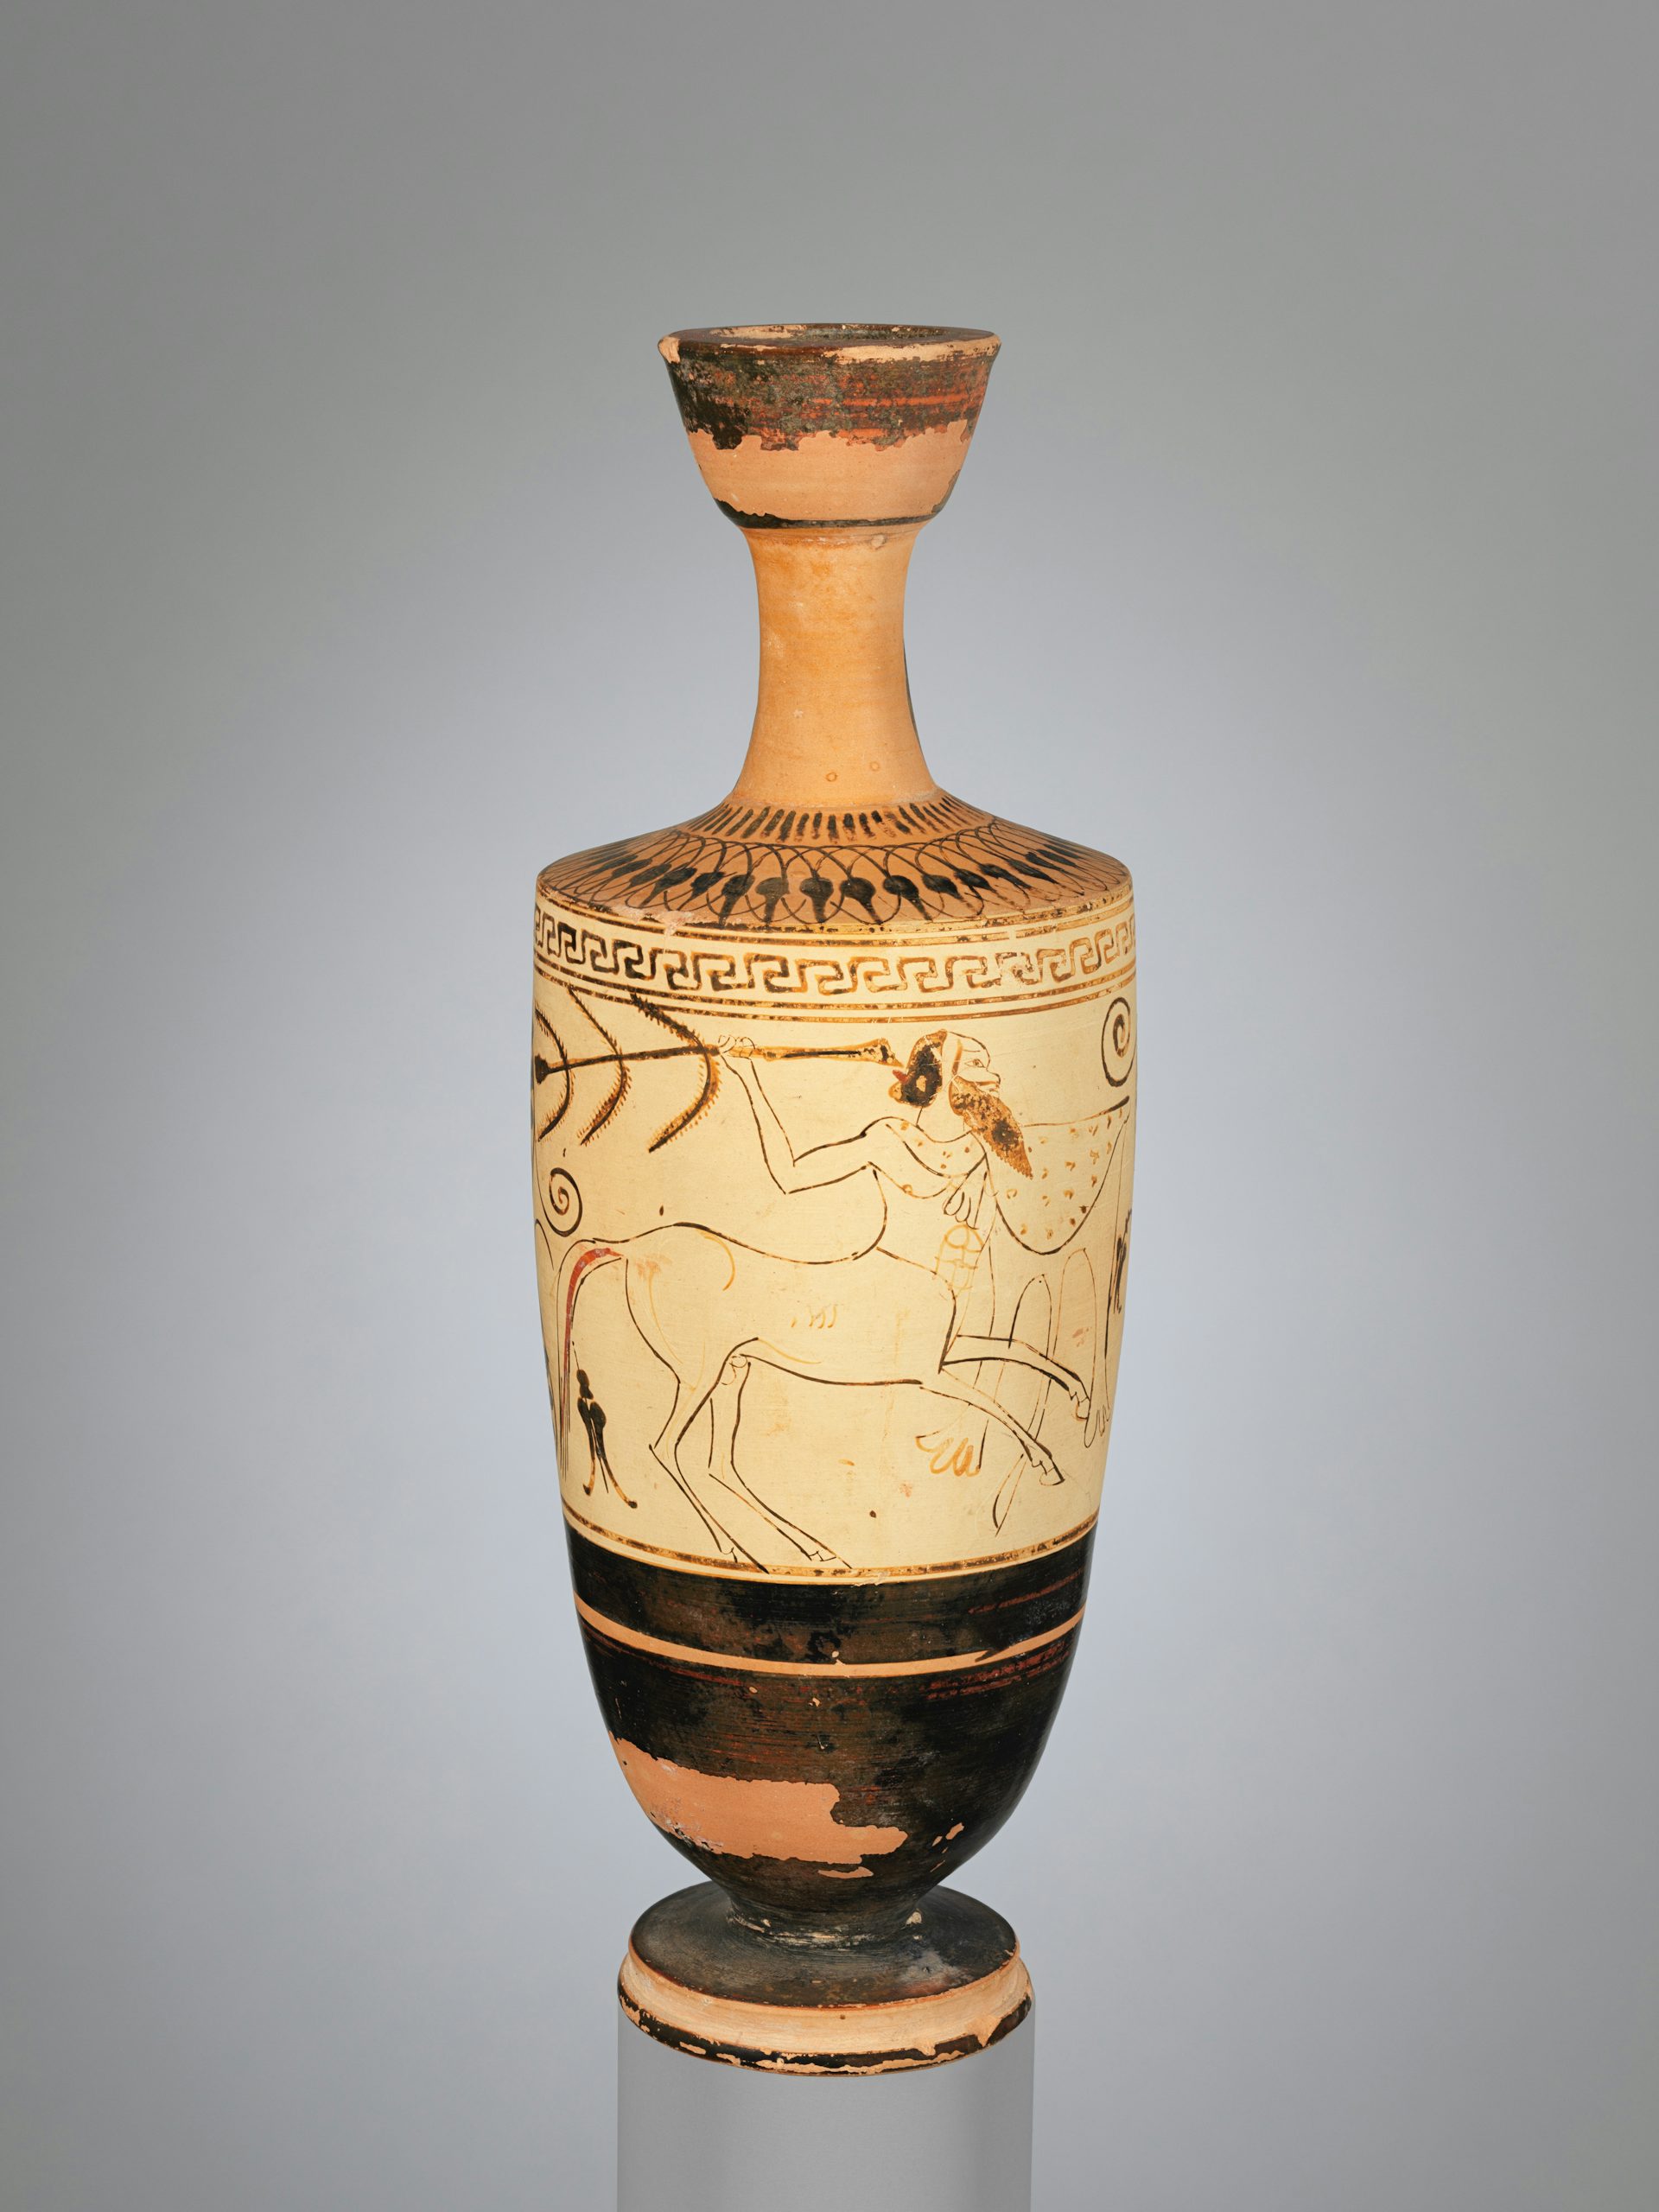 Centaur terracotta lekythos attributed to workshop of Diosophos Painter, late-5th Century BCE